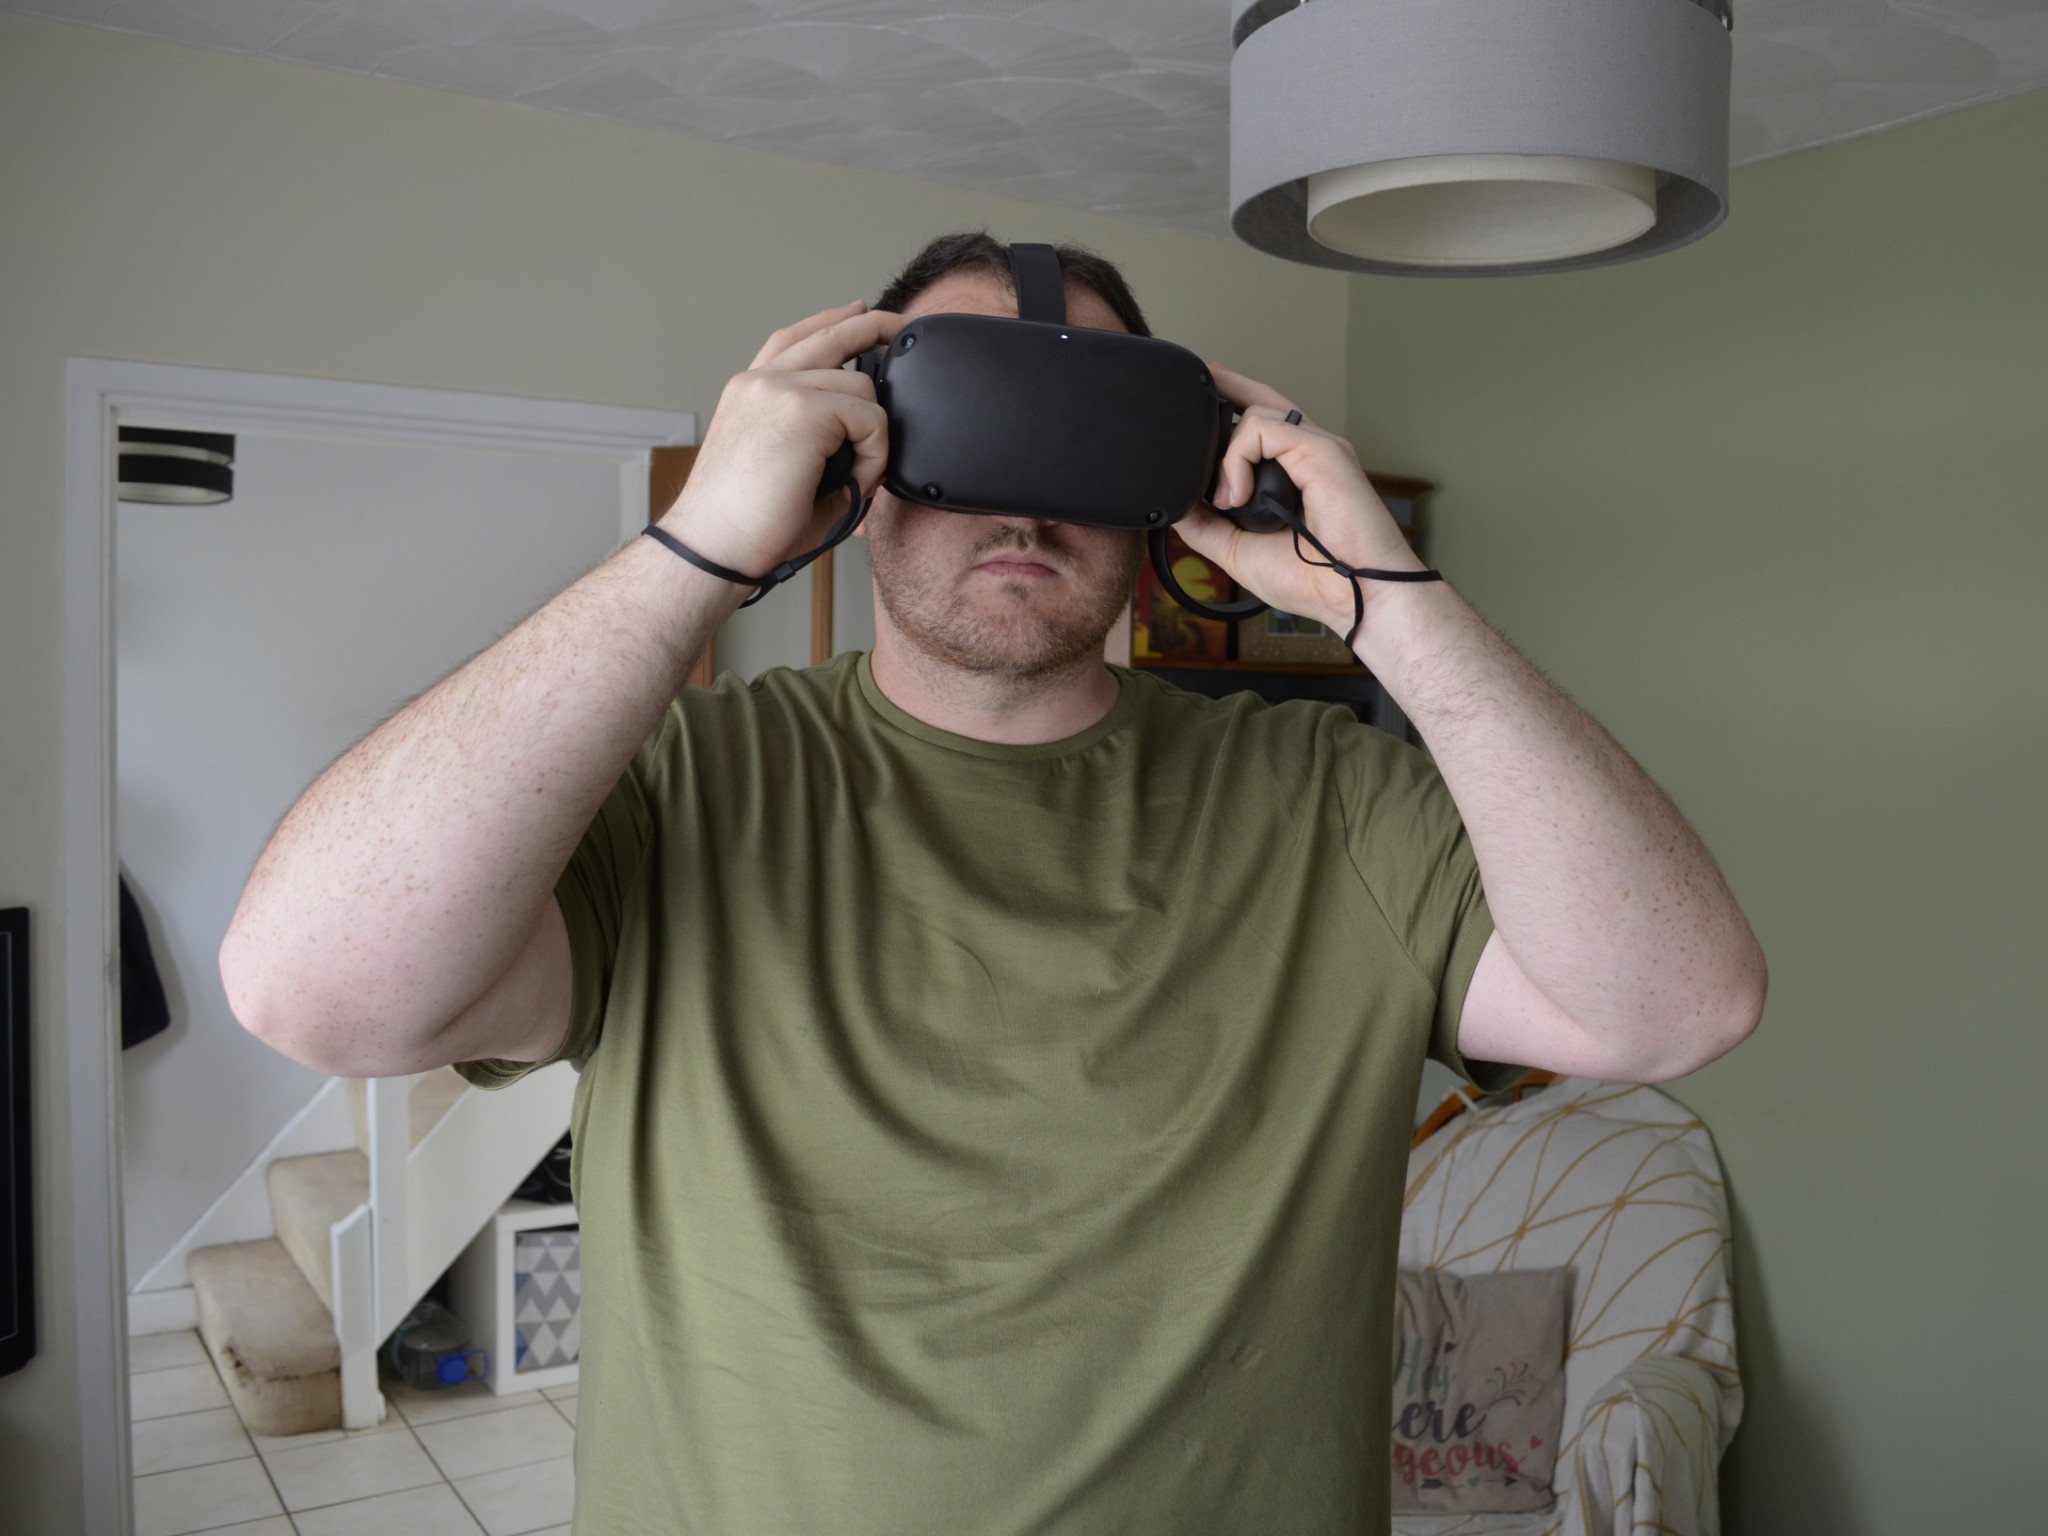 oculus-quest-adjusting-headset.jpg?itok=